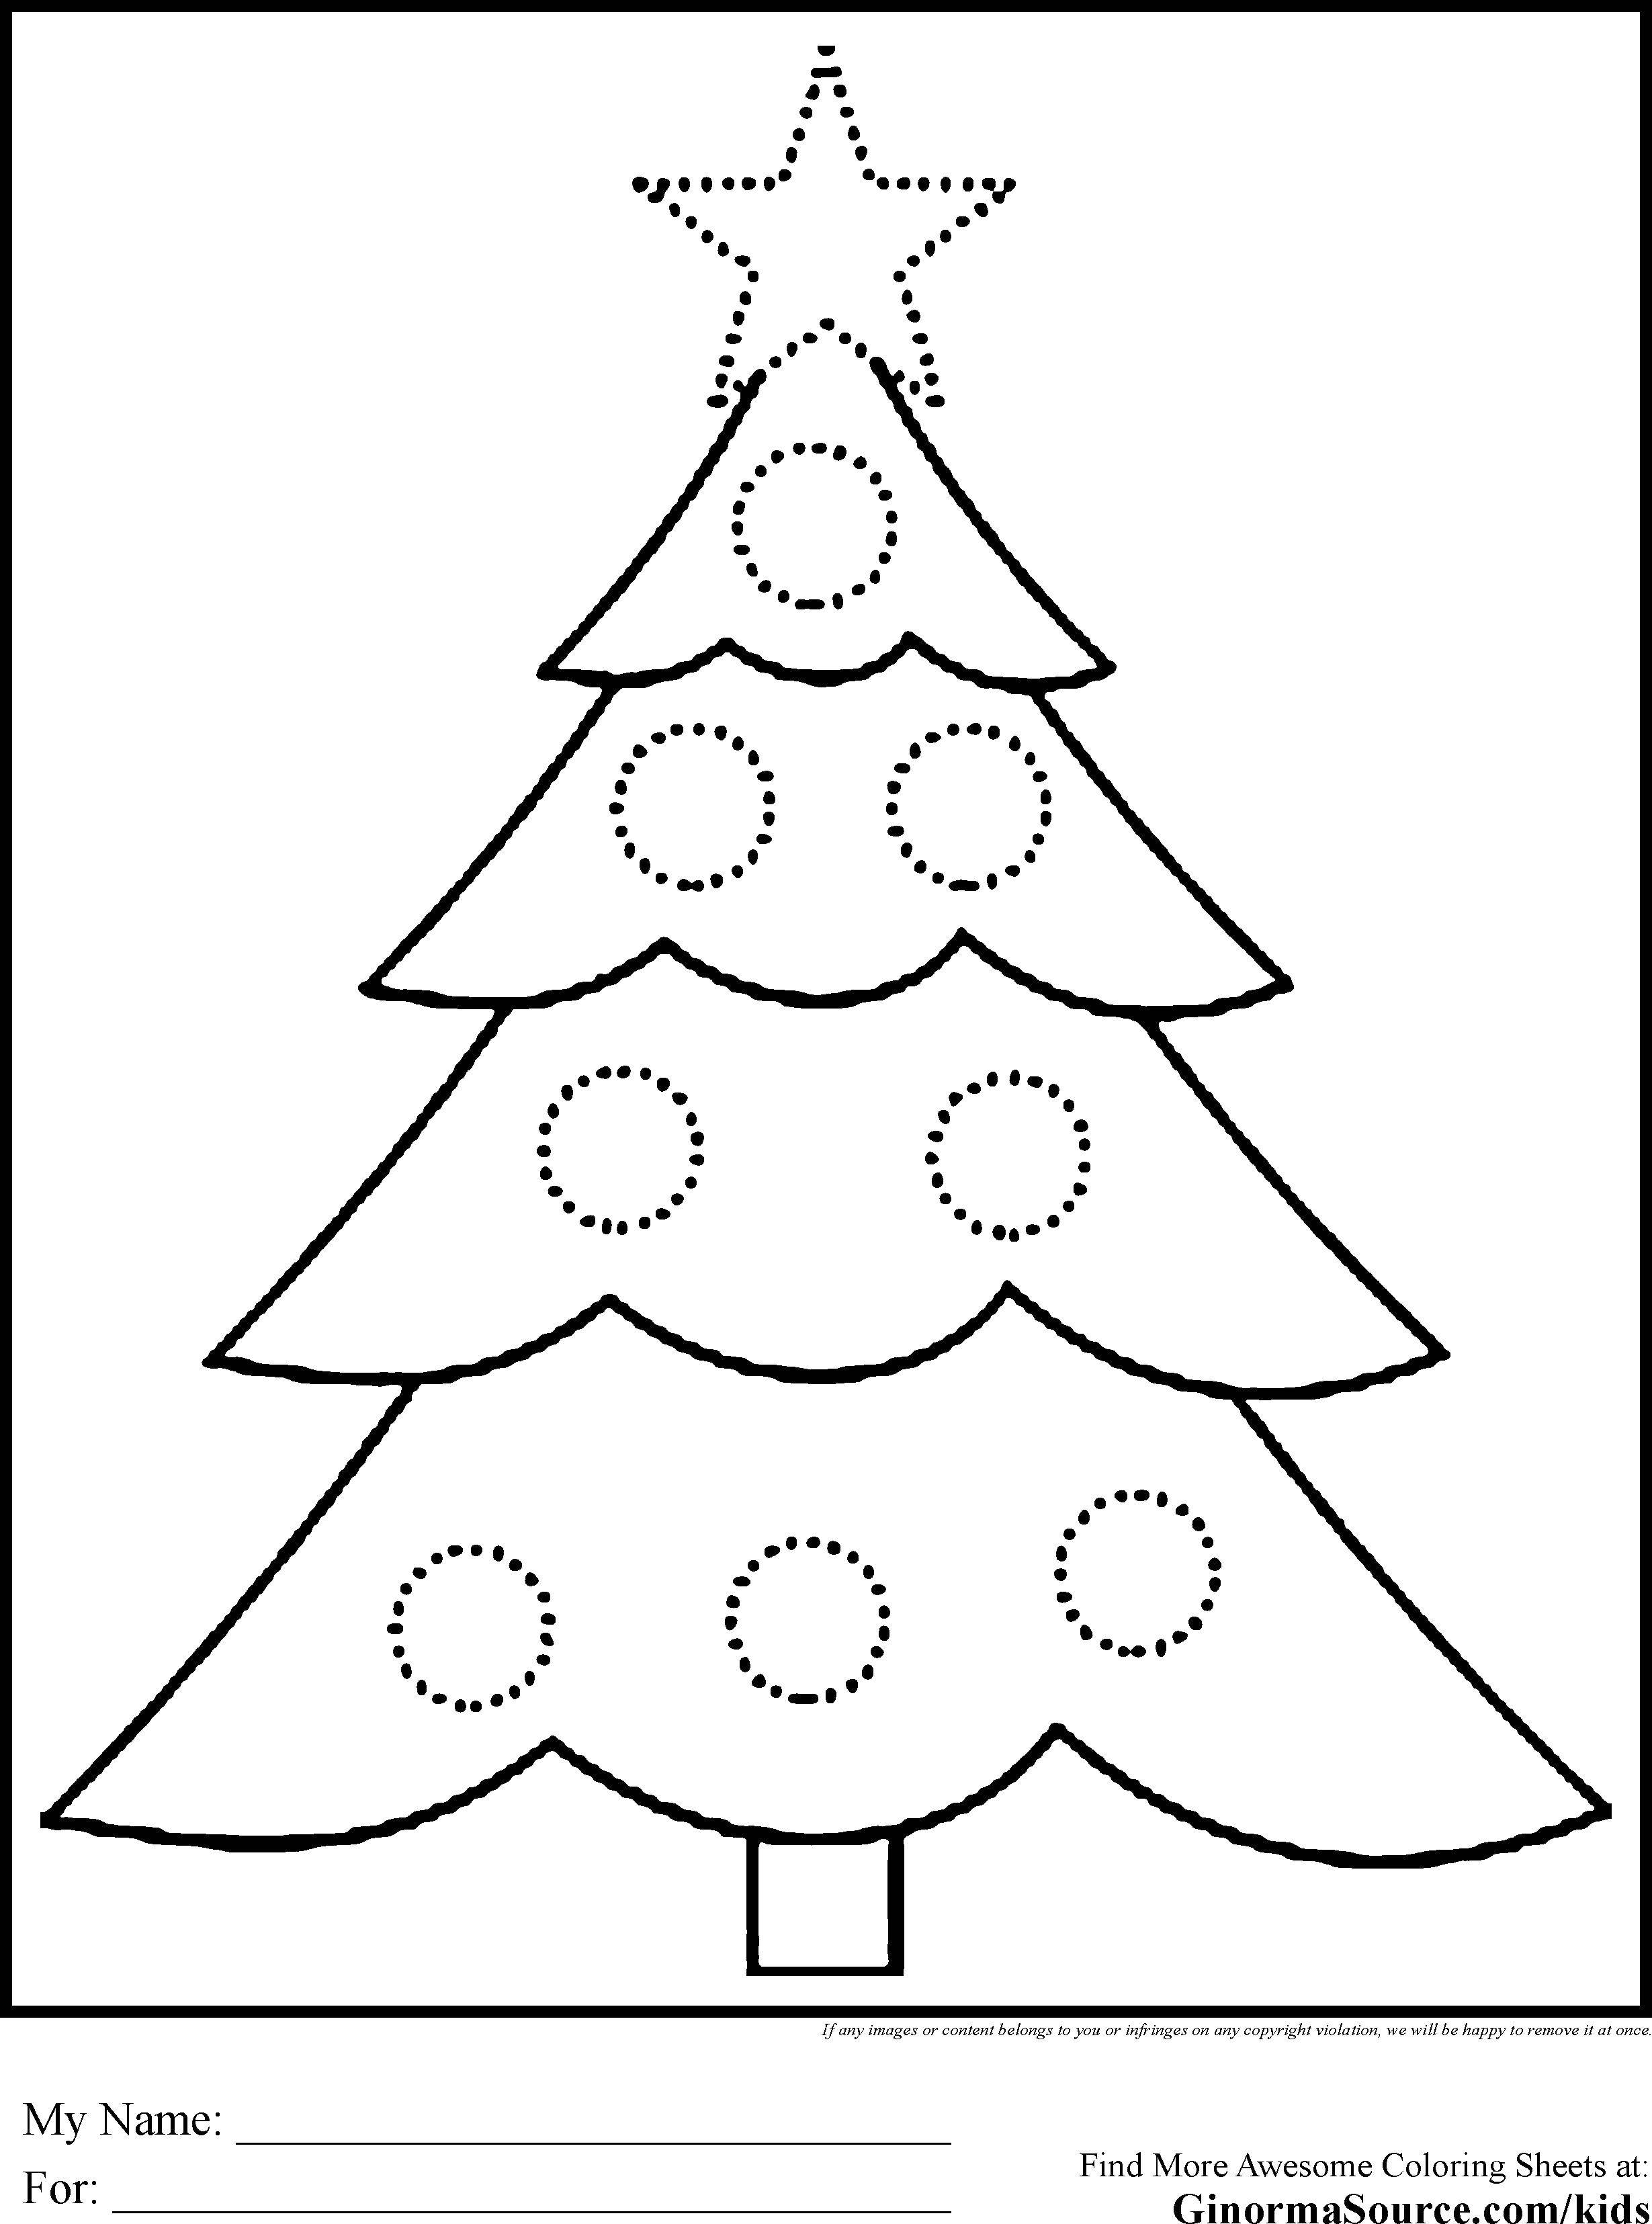 Coloring Christmas tree and Christmas toys. Category Christmas. Tags:  tree, toys, star.